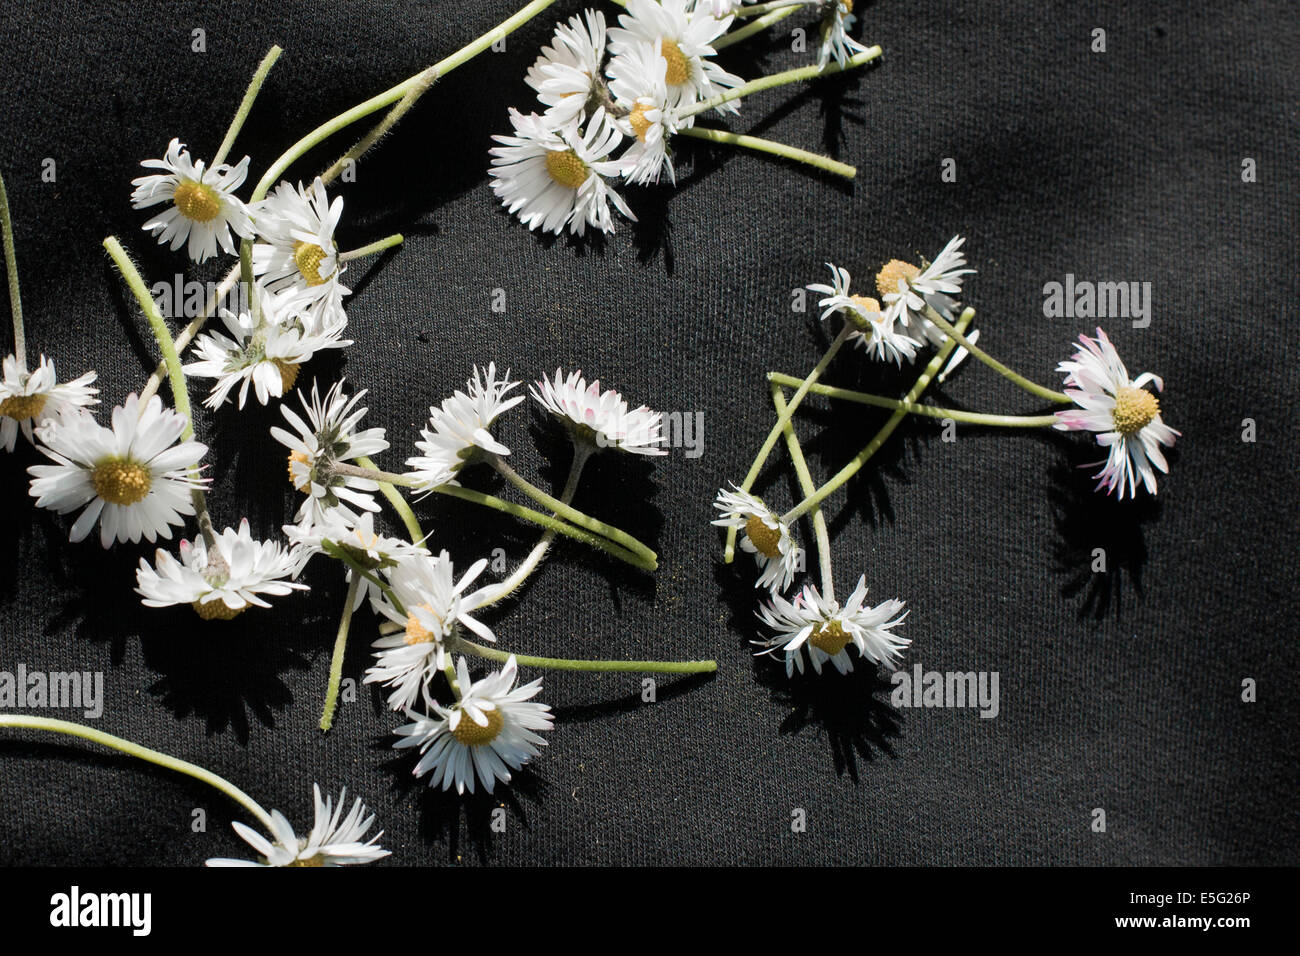 Cut daisies on black blanket Stock Photo